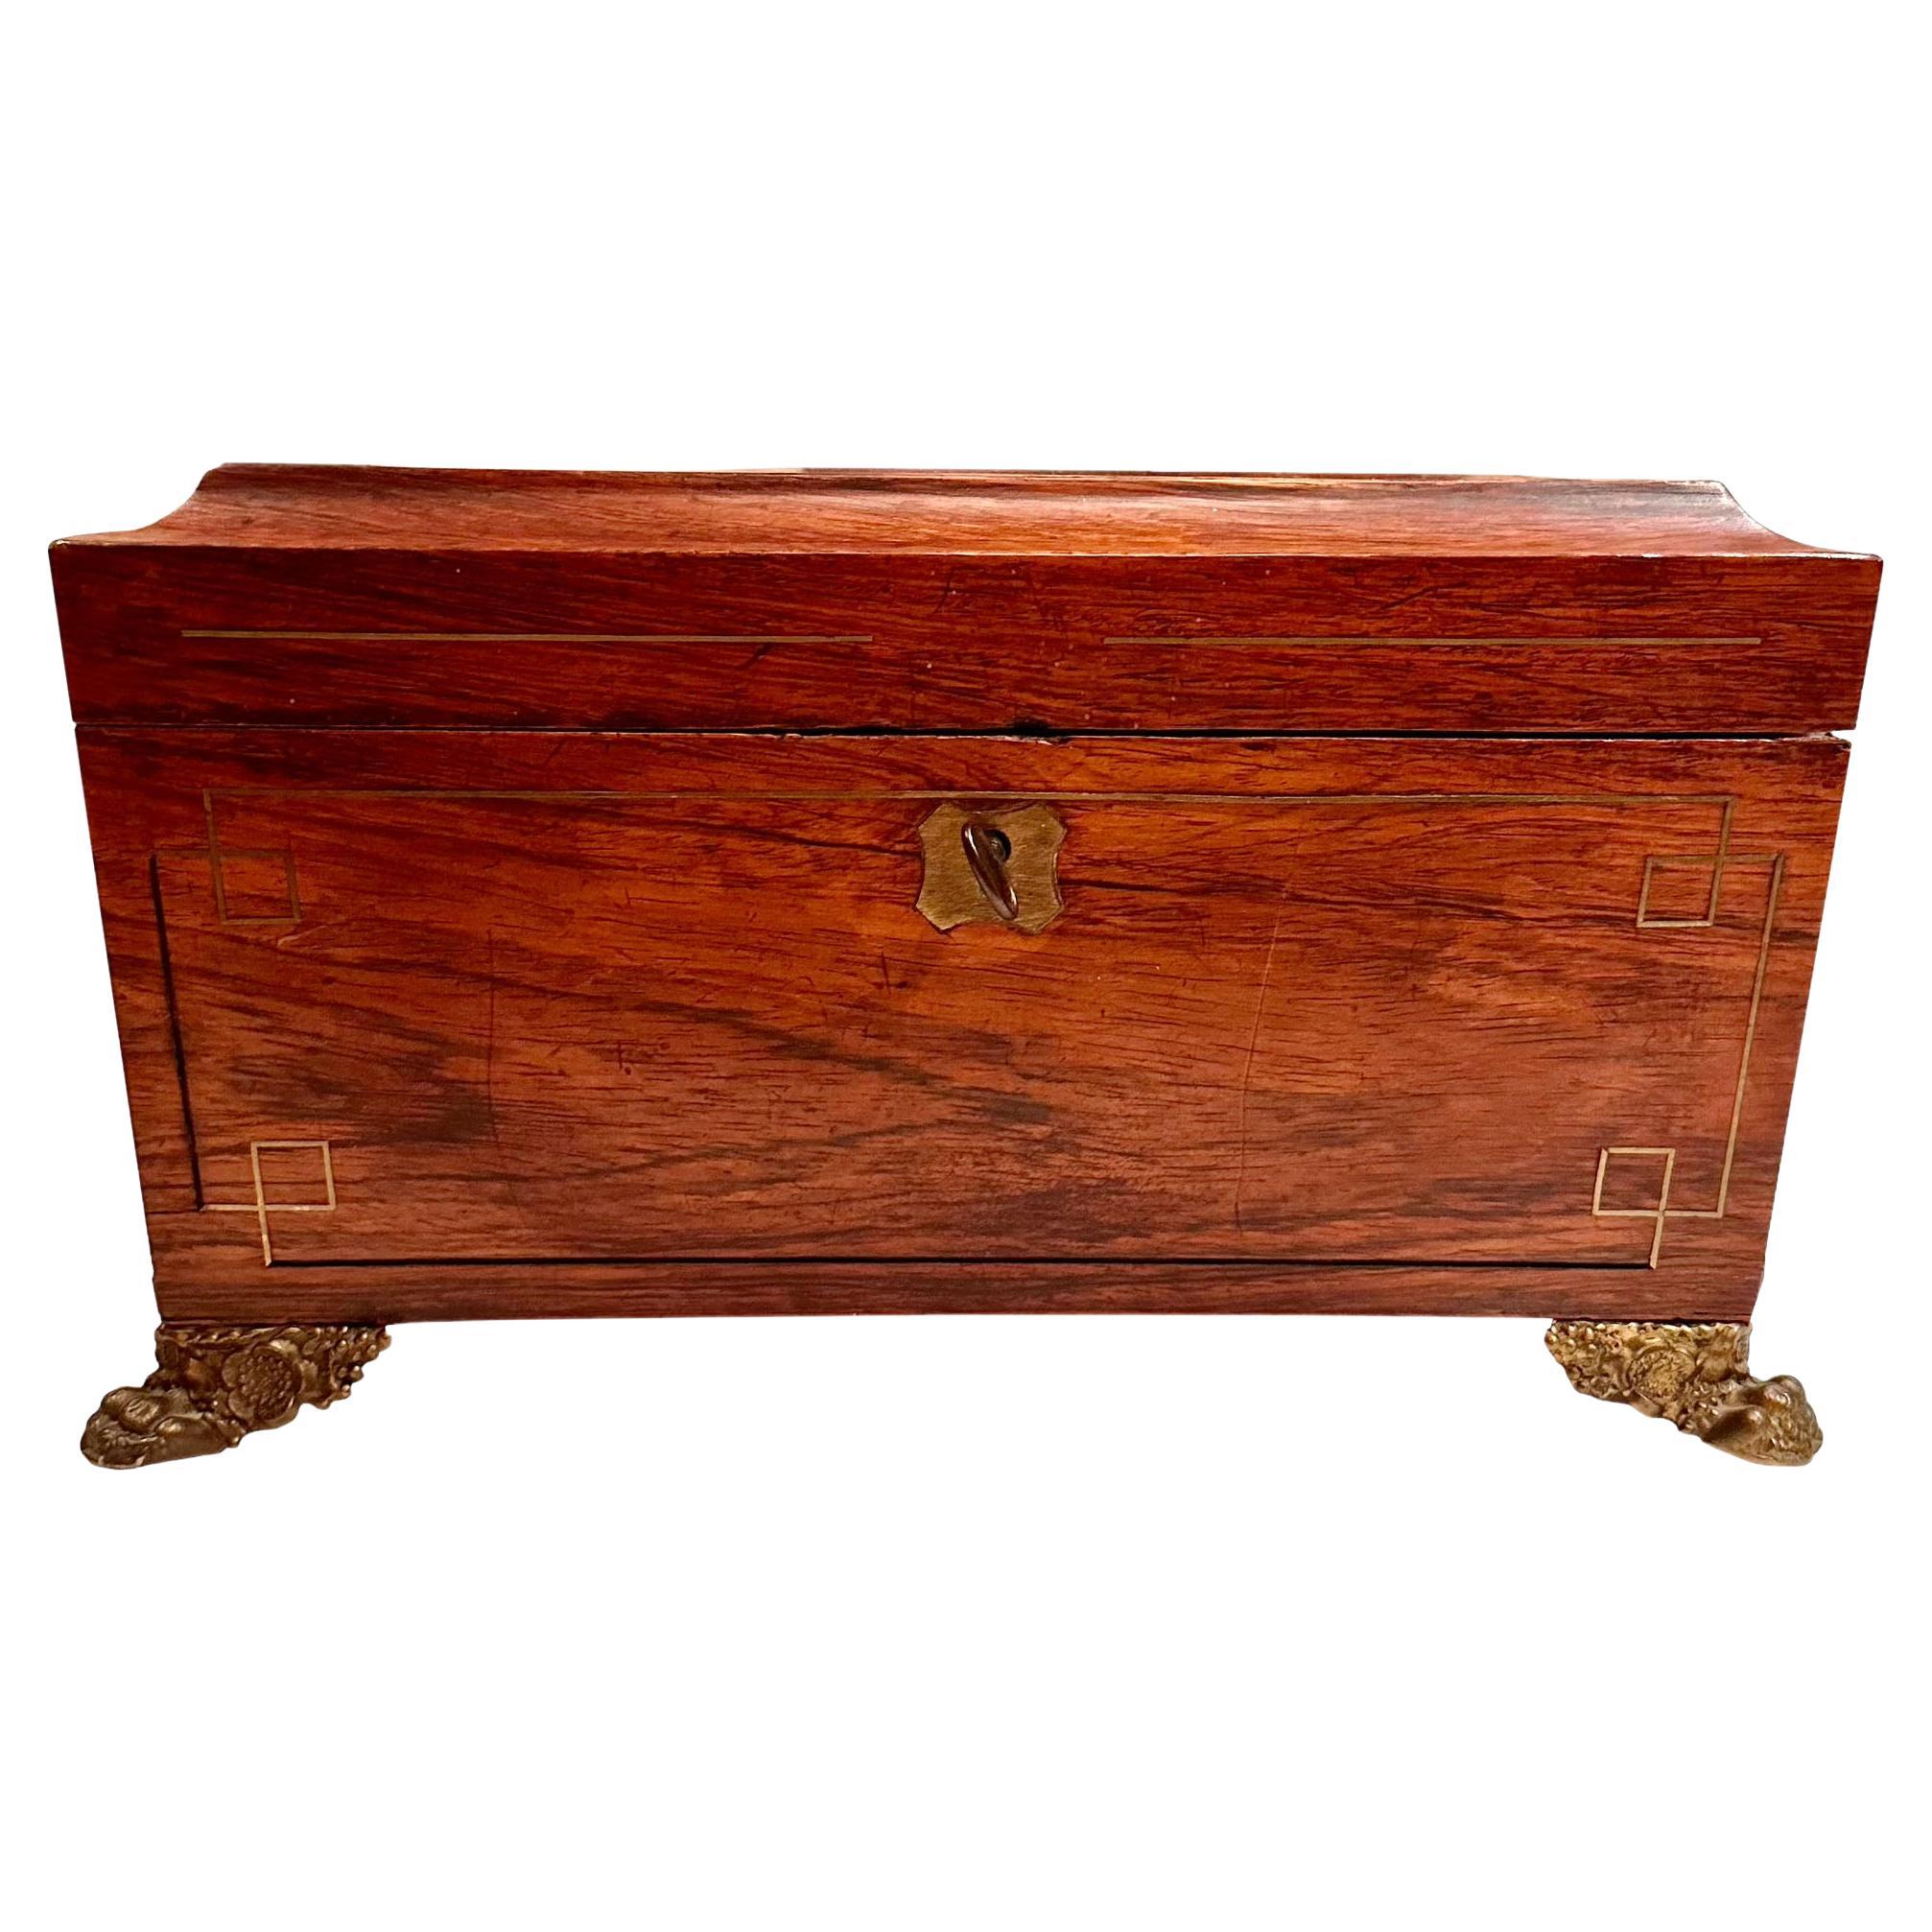 Vintage English Art Deco Mahogany Apple Form Tea Caddy or Box with